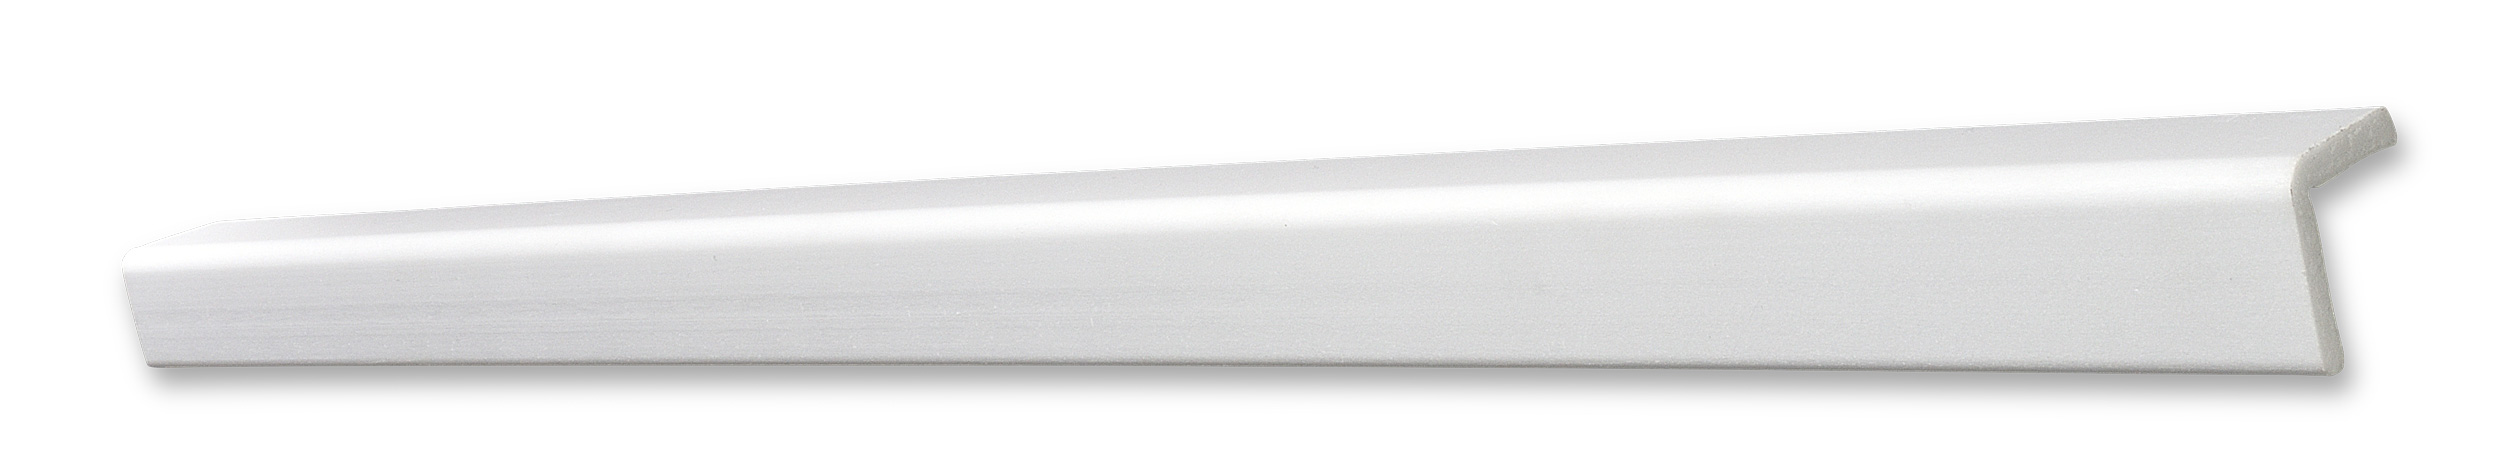 DECOSA Profil d'angle WP30 - polystyrène extra dur - blanc - 30 x 30 mm - longueur 2 m